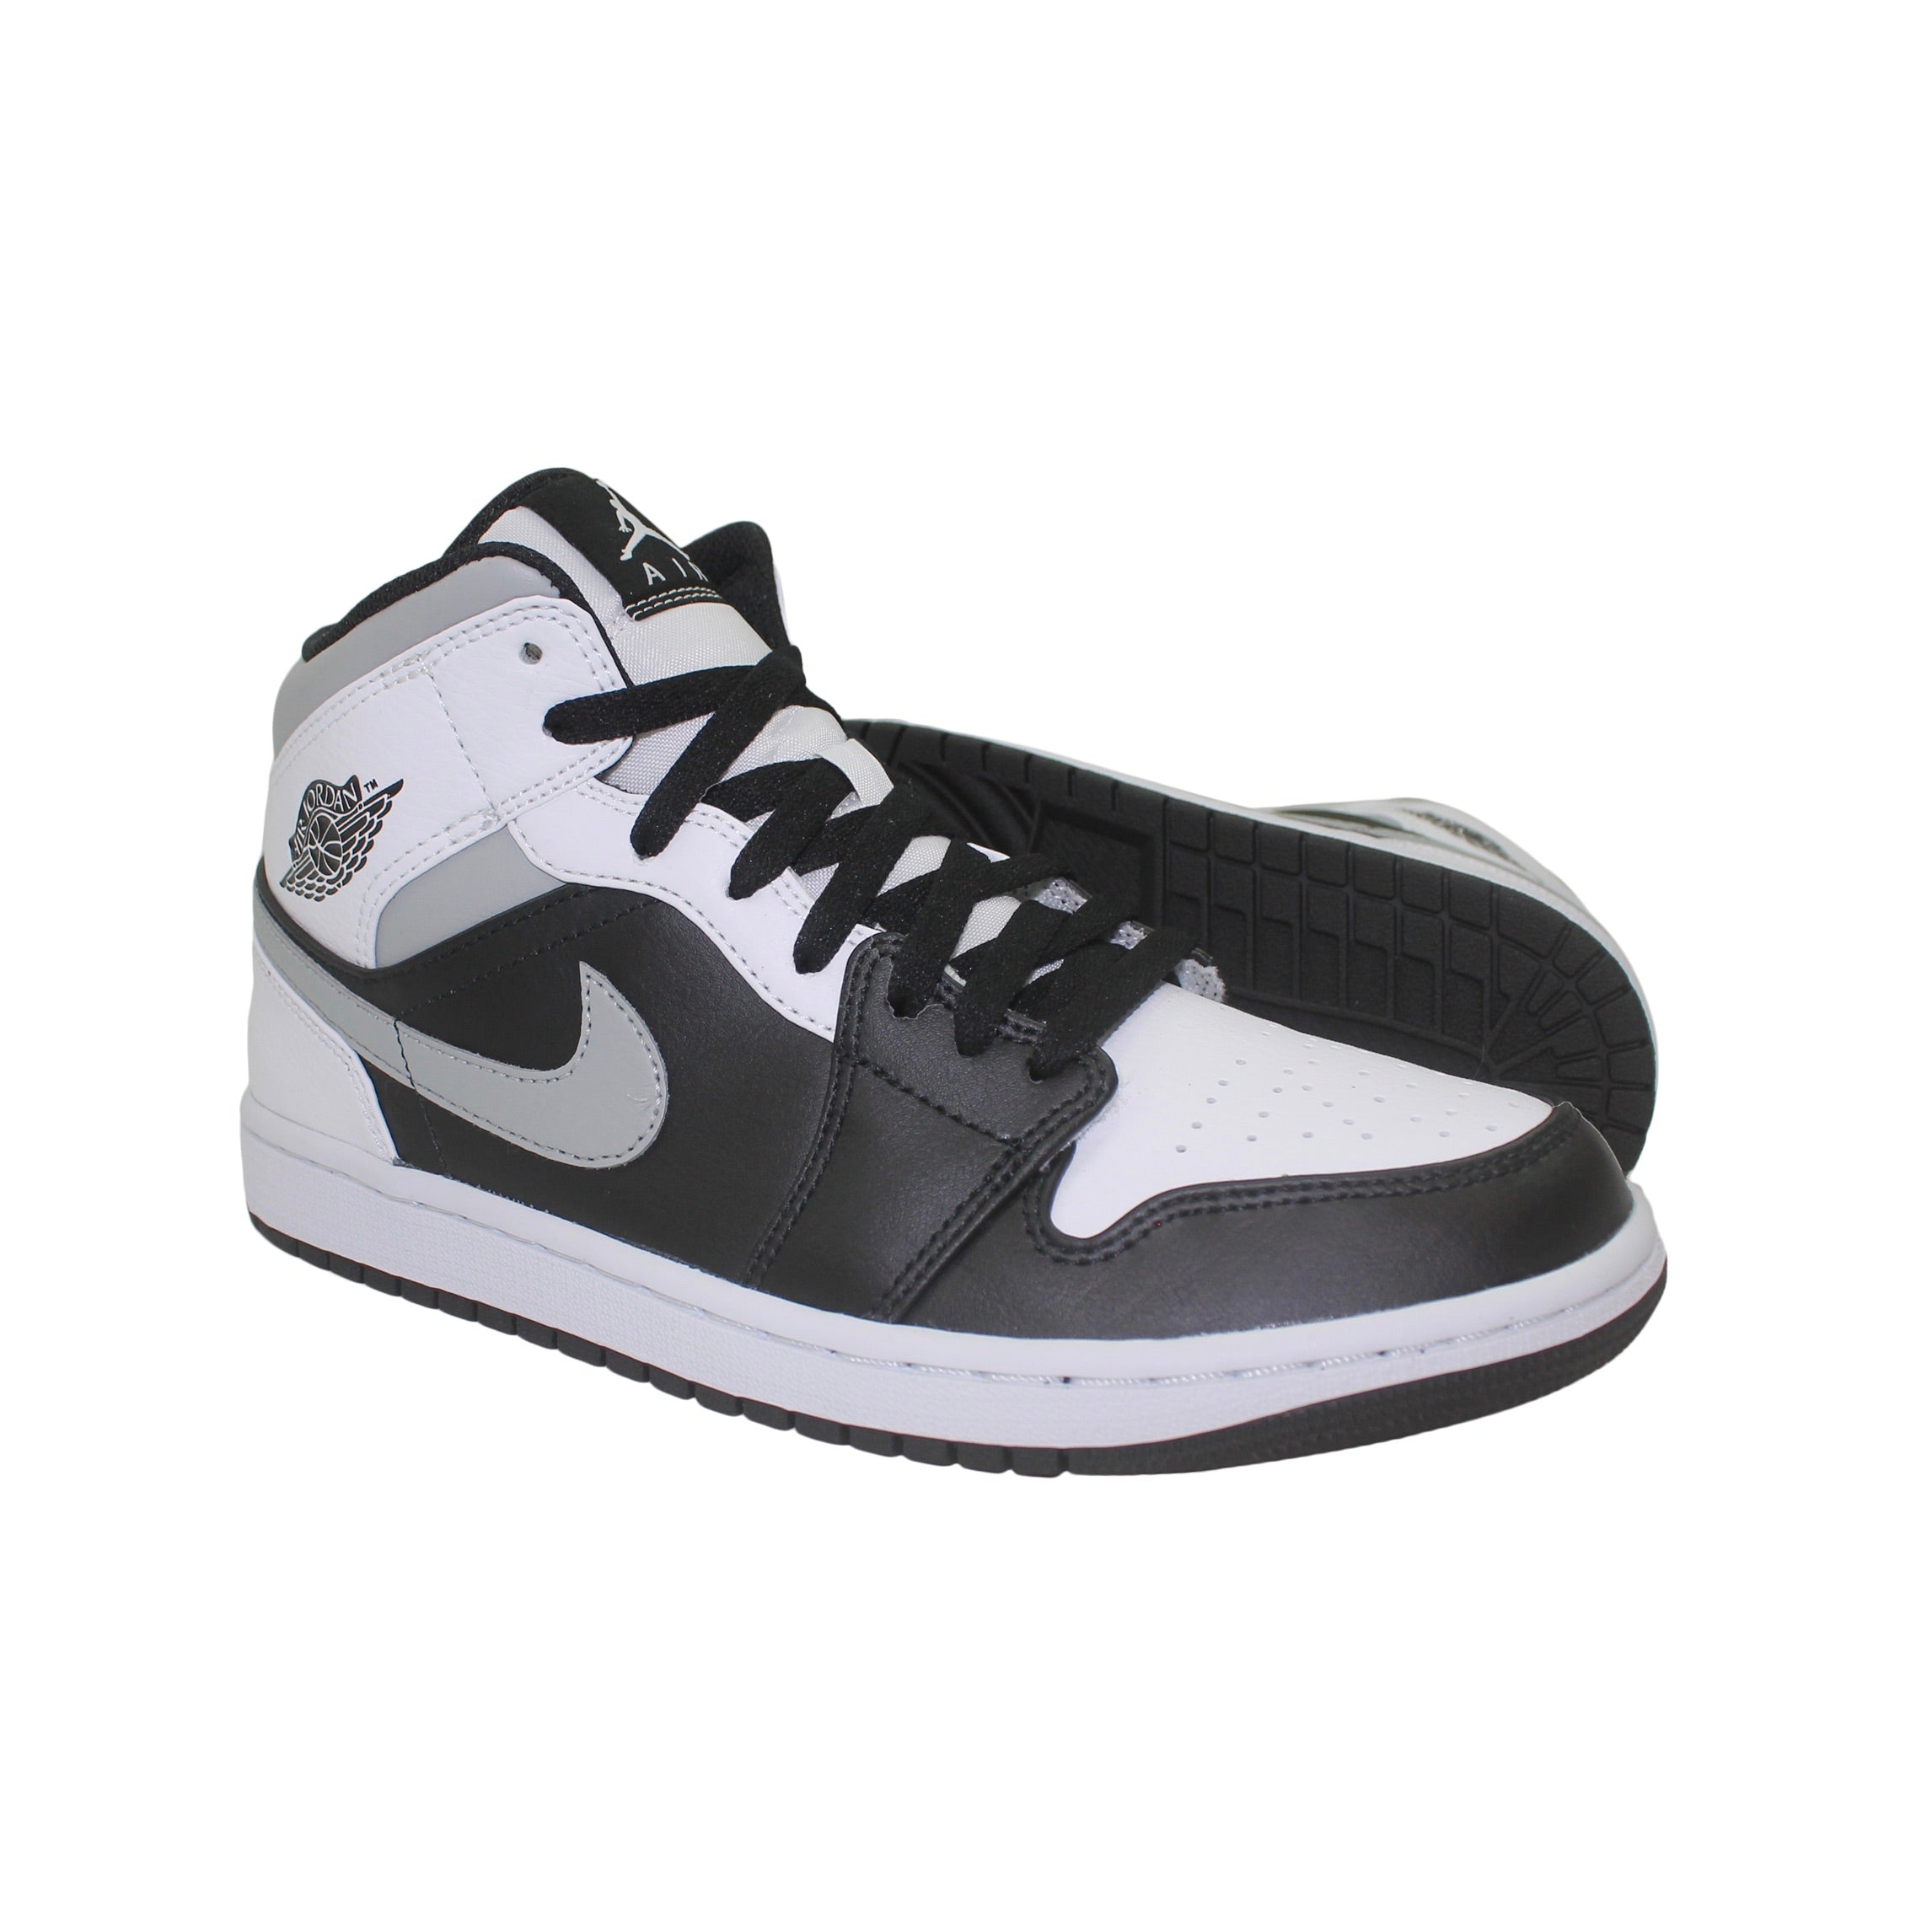 Nike Air Jordan 1 Mid Shadow